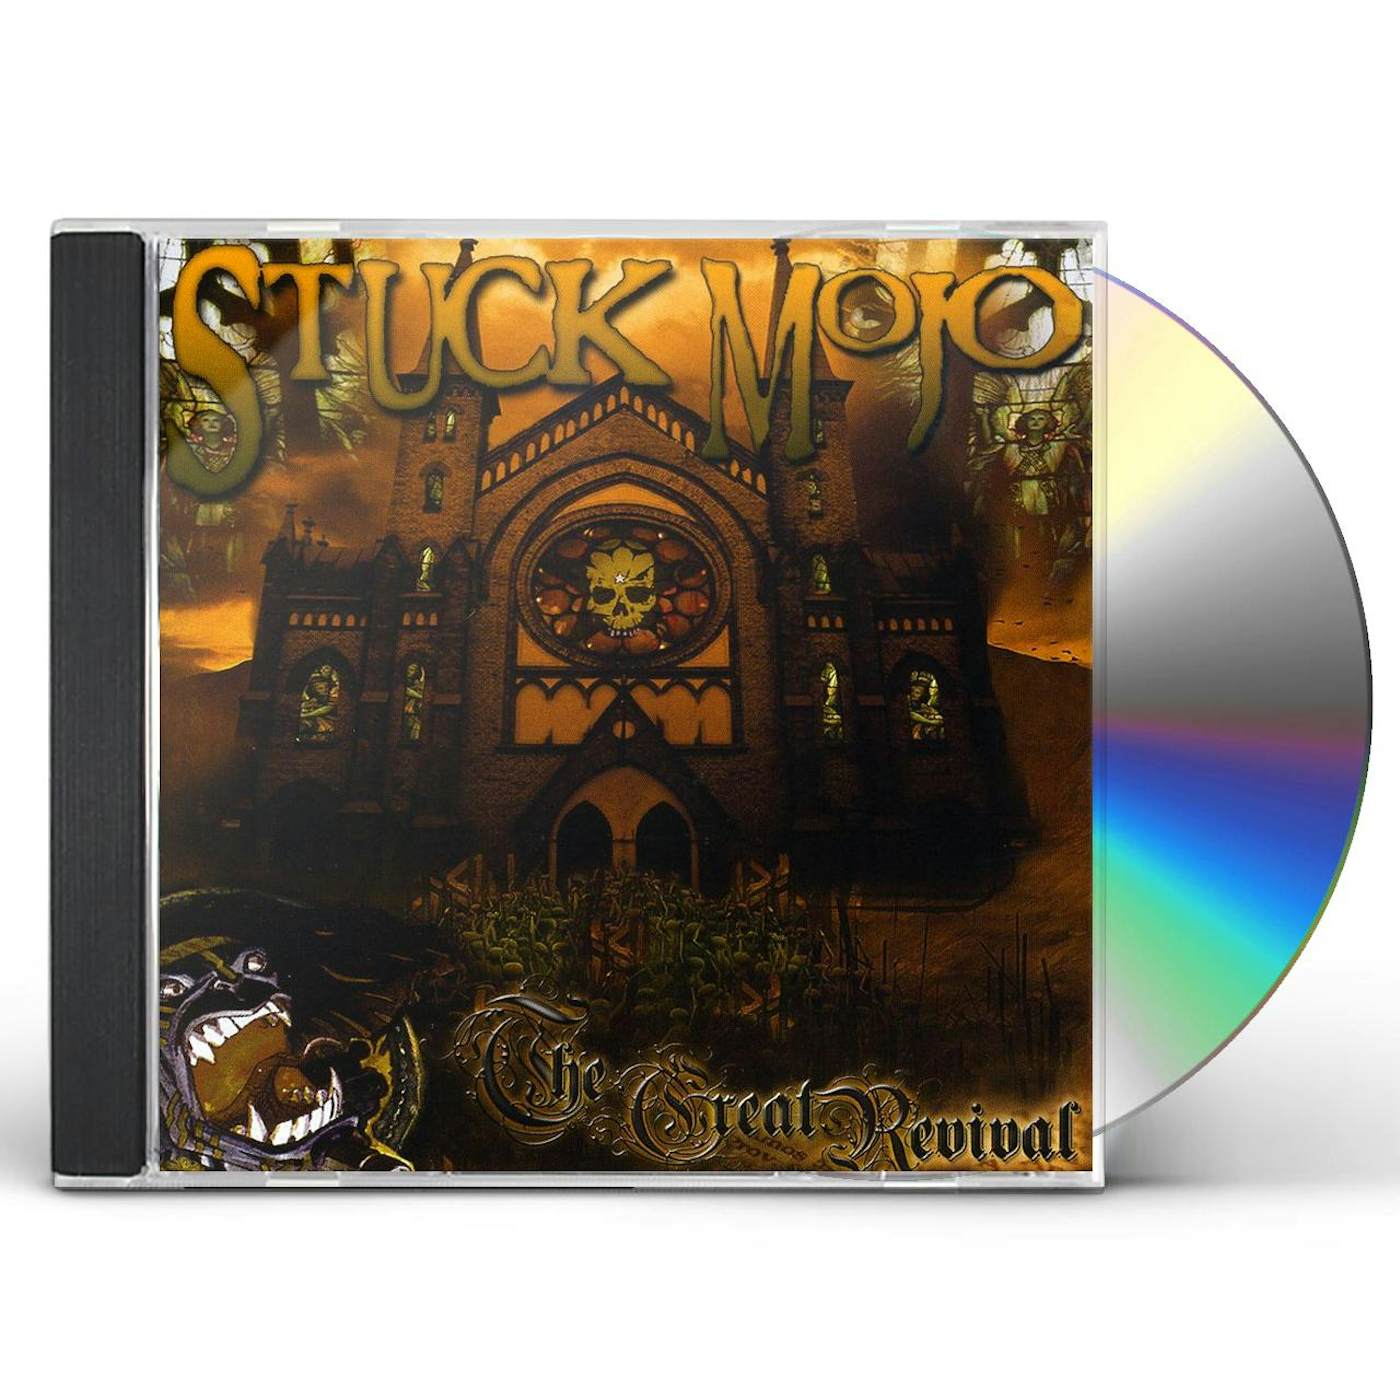 Stuck Mojo GREAT REVIVAL CD